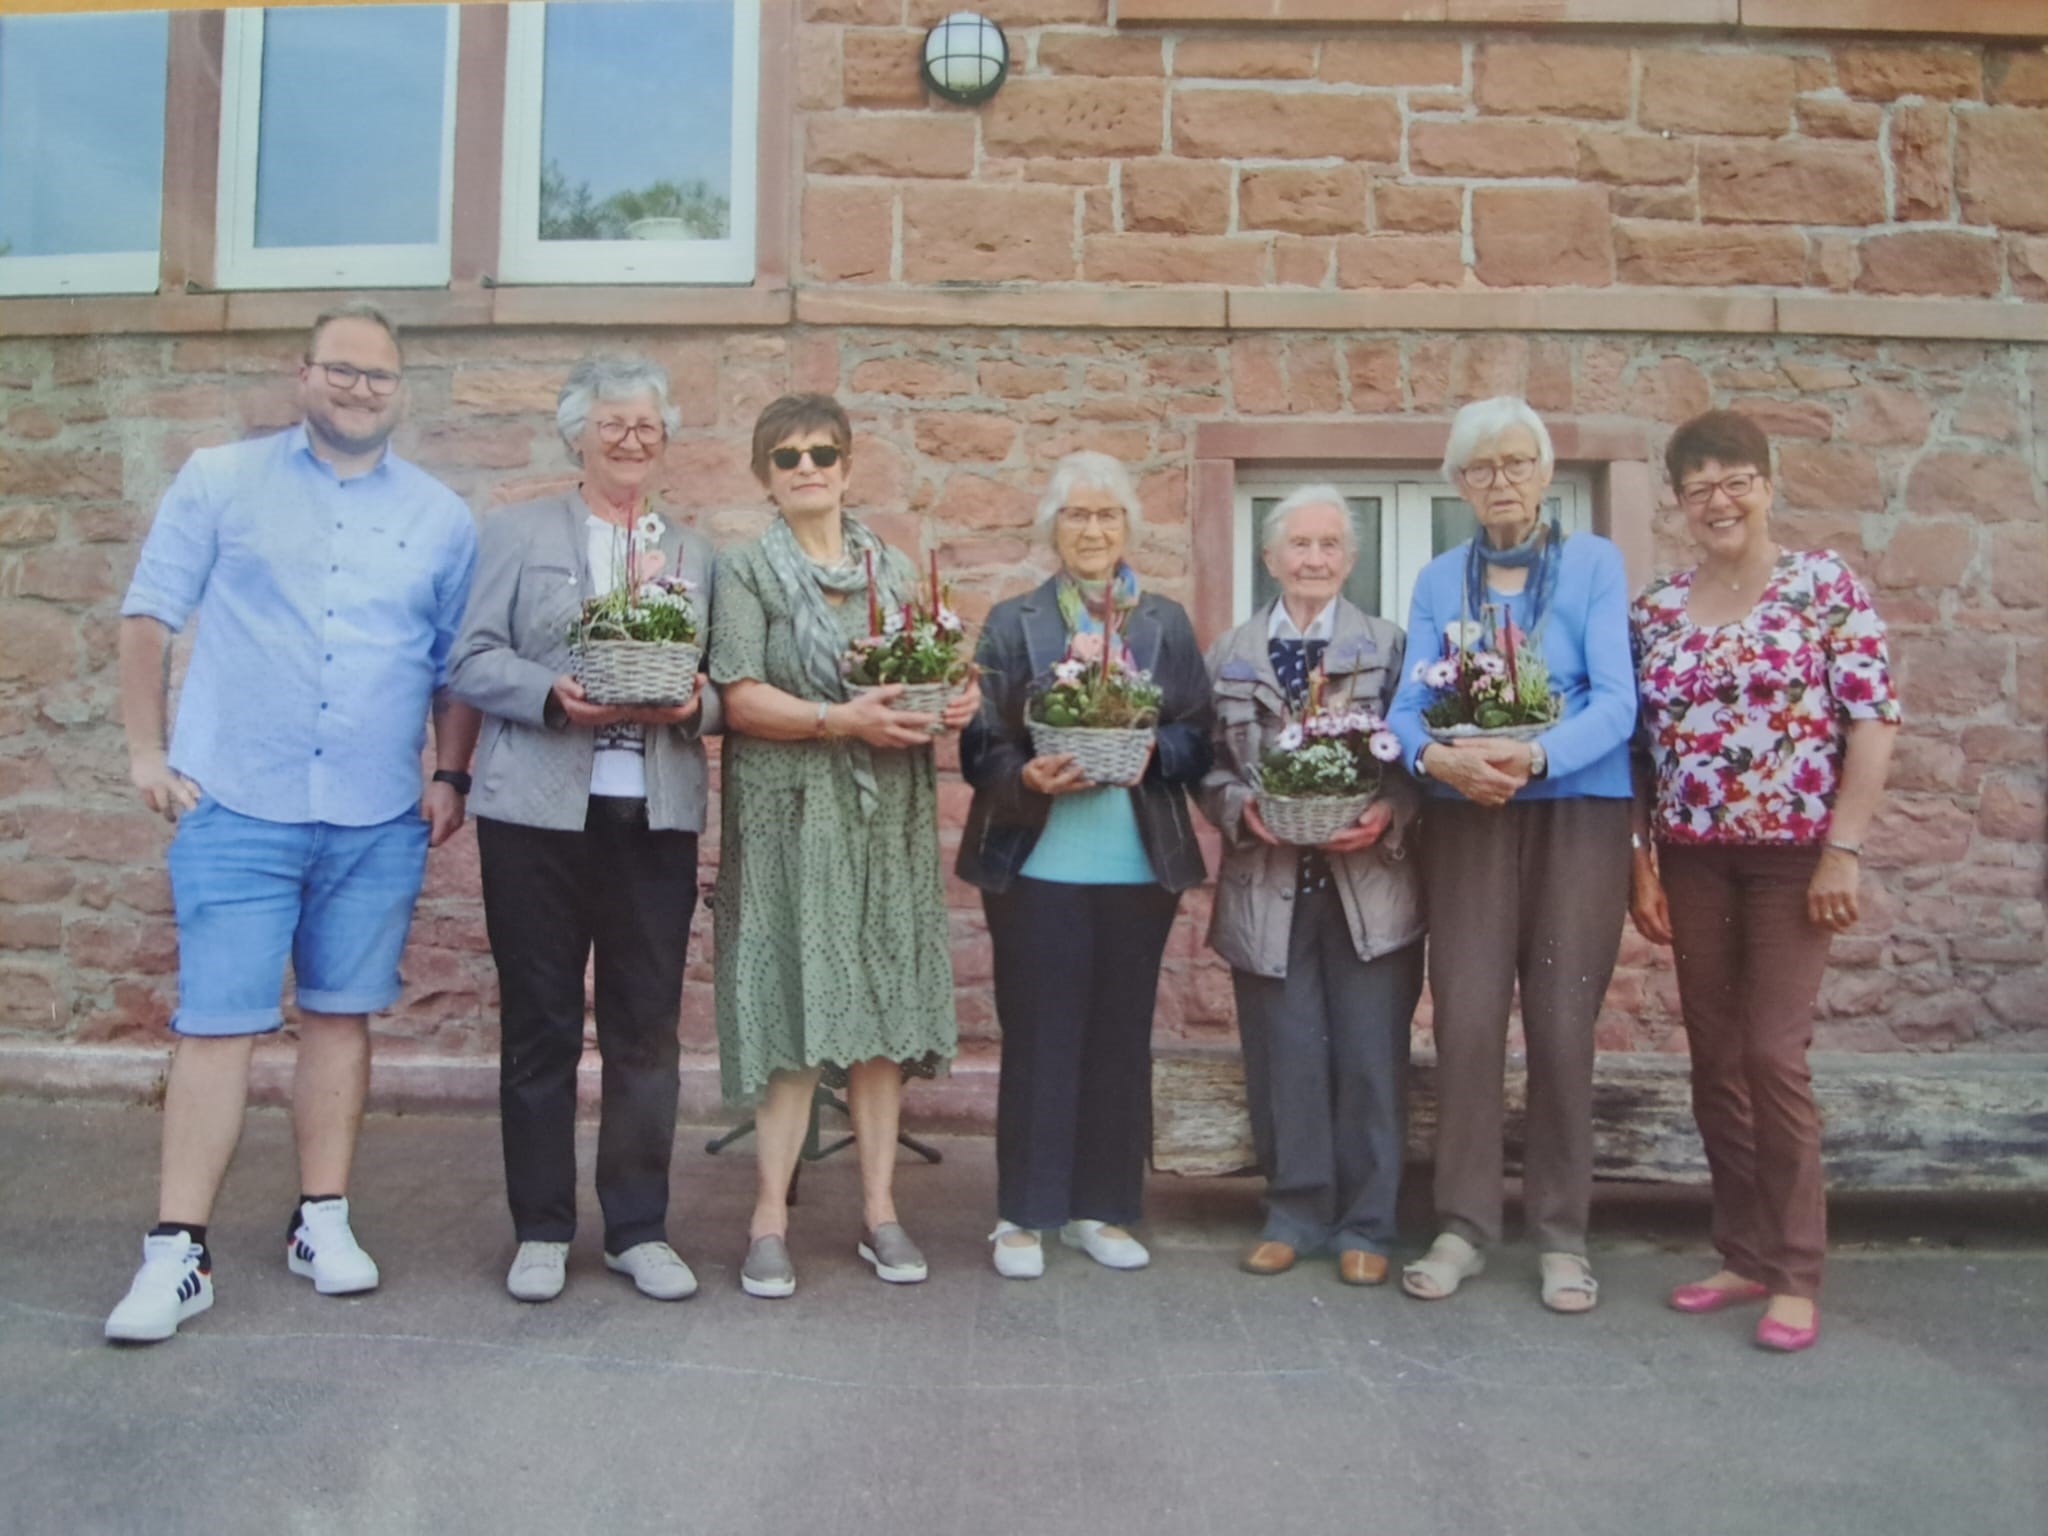  Kindergartenleiter Daniel Heidemann, Dora Büttner, Doris Aull, Herma Glaab, Ilse Röll, Gerlinde Kaiser und Bürgermeisterin Angelika Krebs 